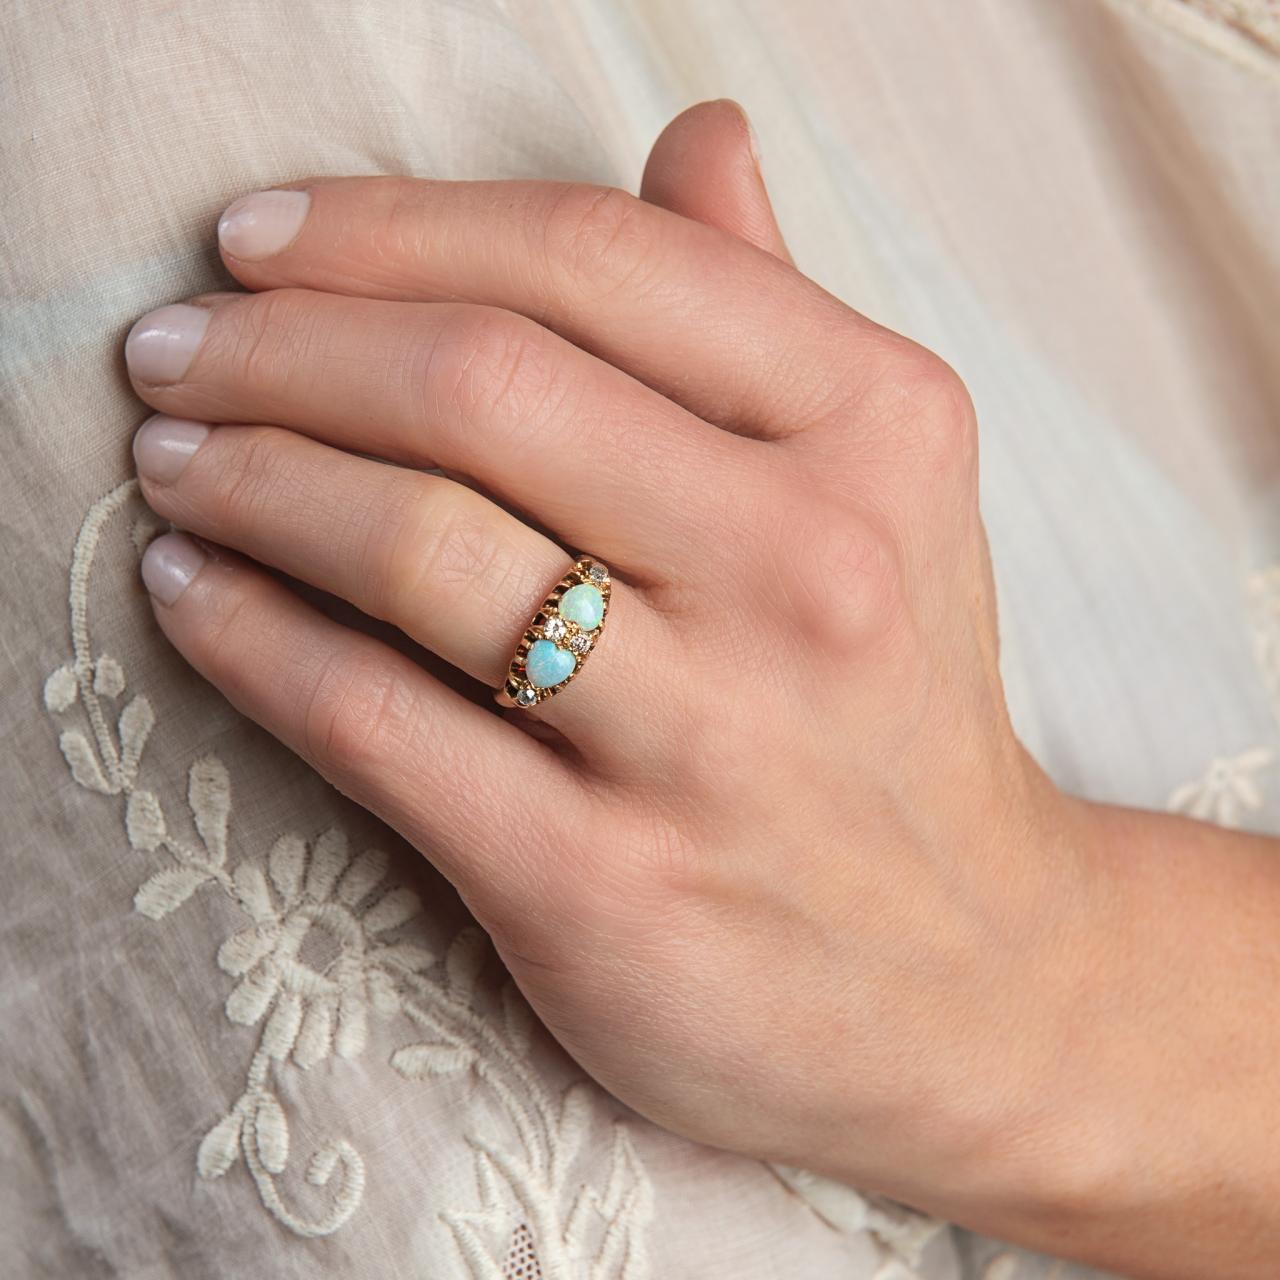 Rare pristine antique opal and diamond ring